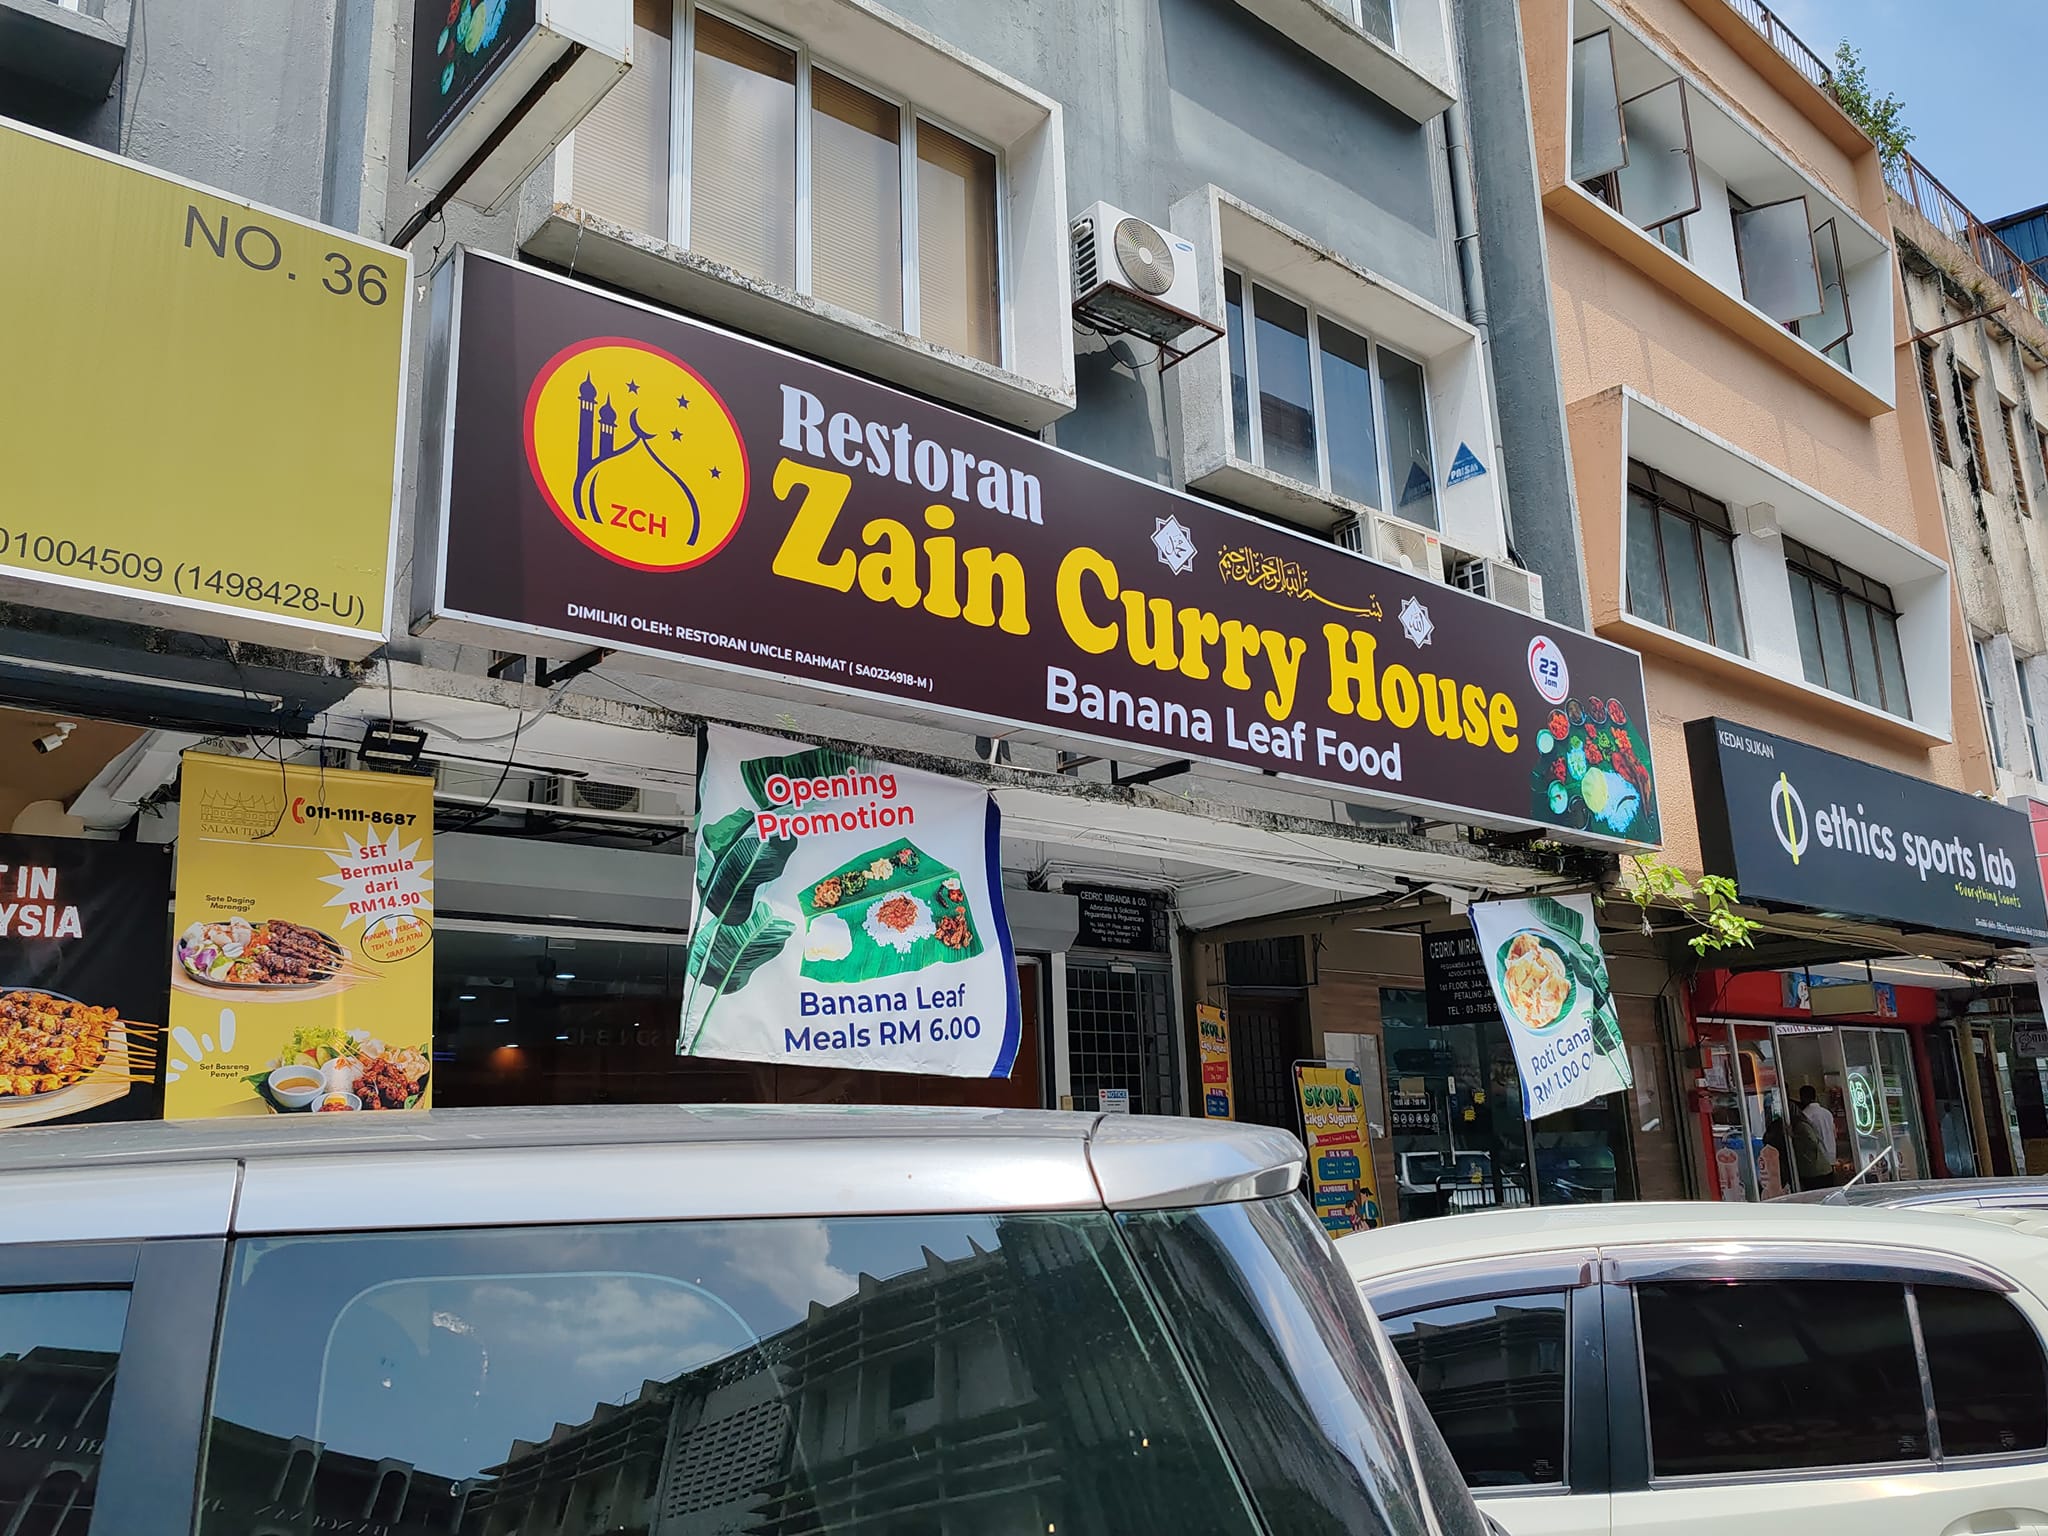 Zain Curry House